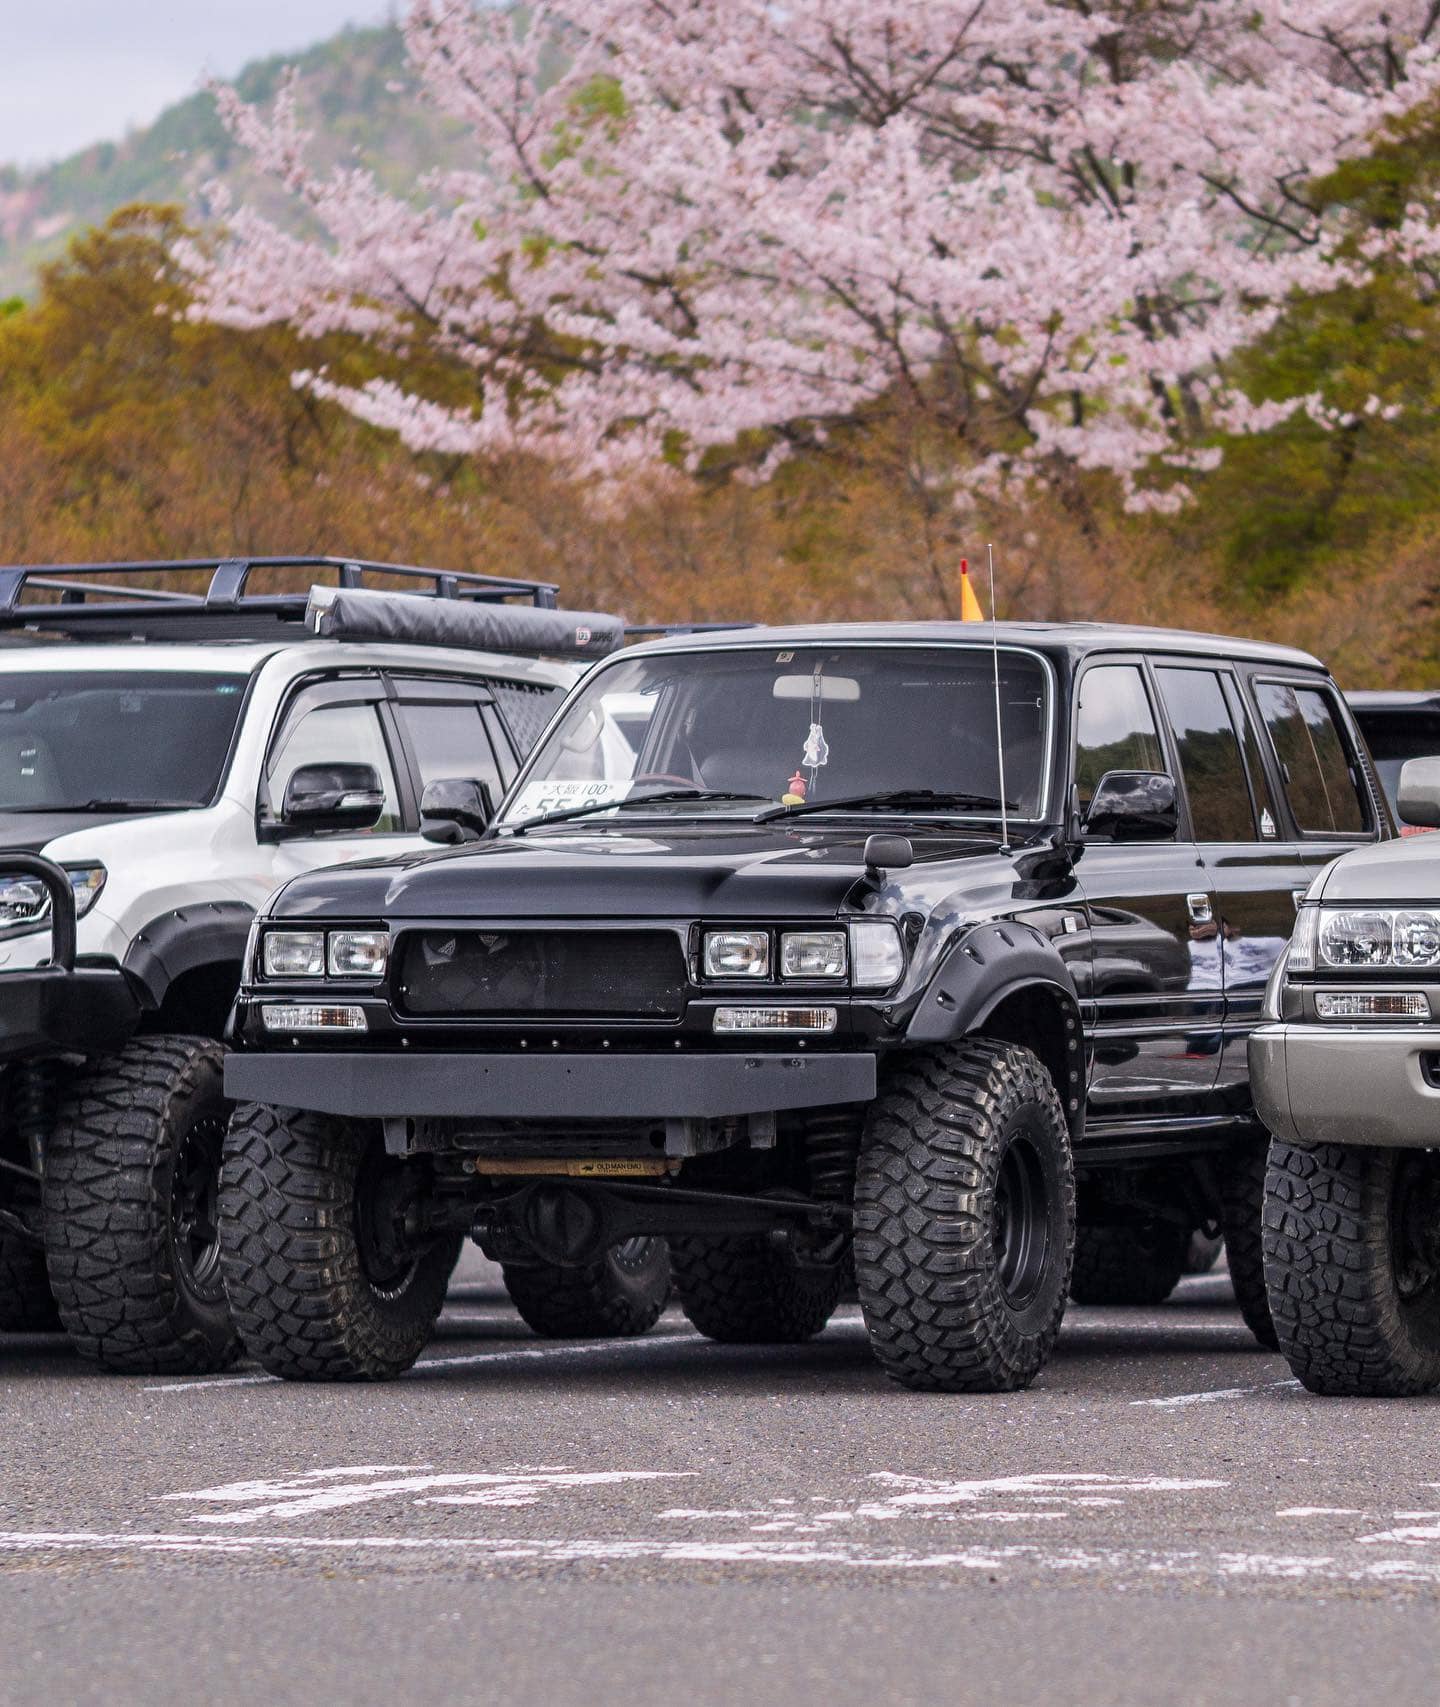 Vintage Off-road Toyota Land Cruiser 80 community in Japan